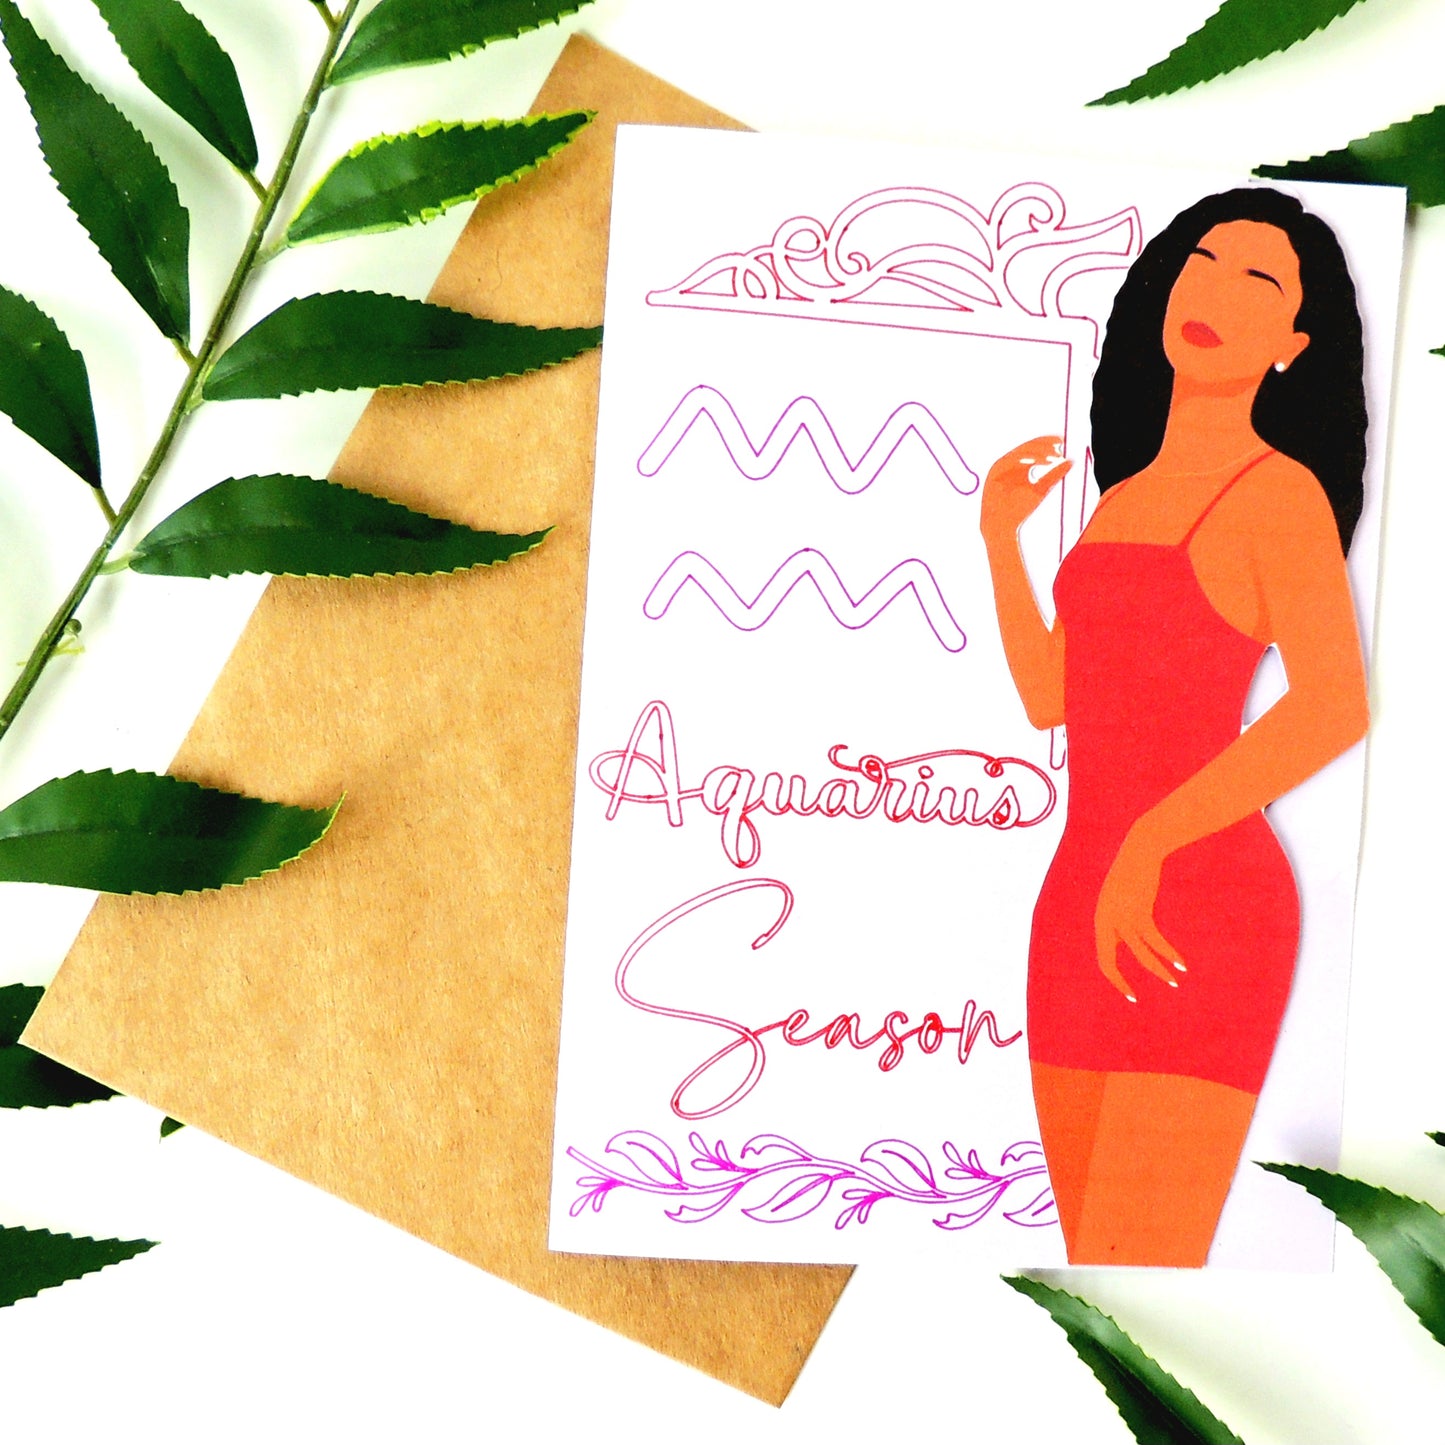 Aquarius Black Woman Birthday Card